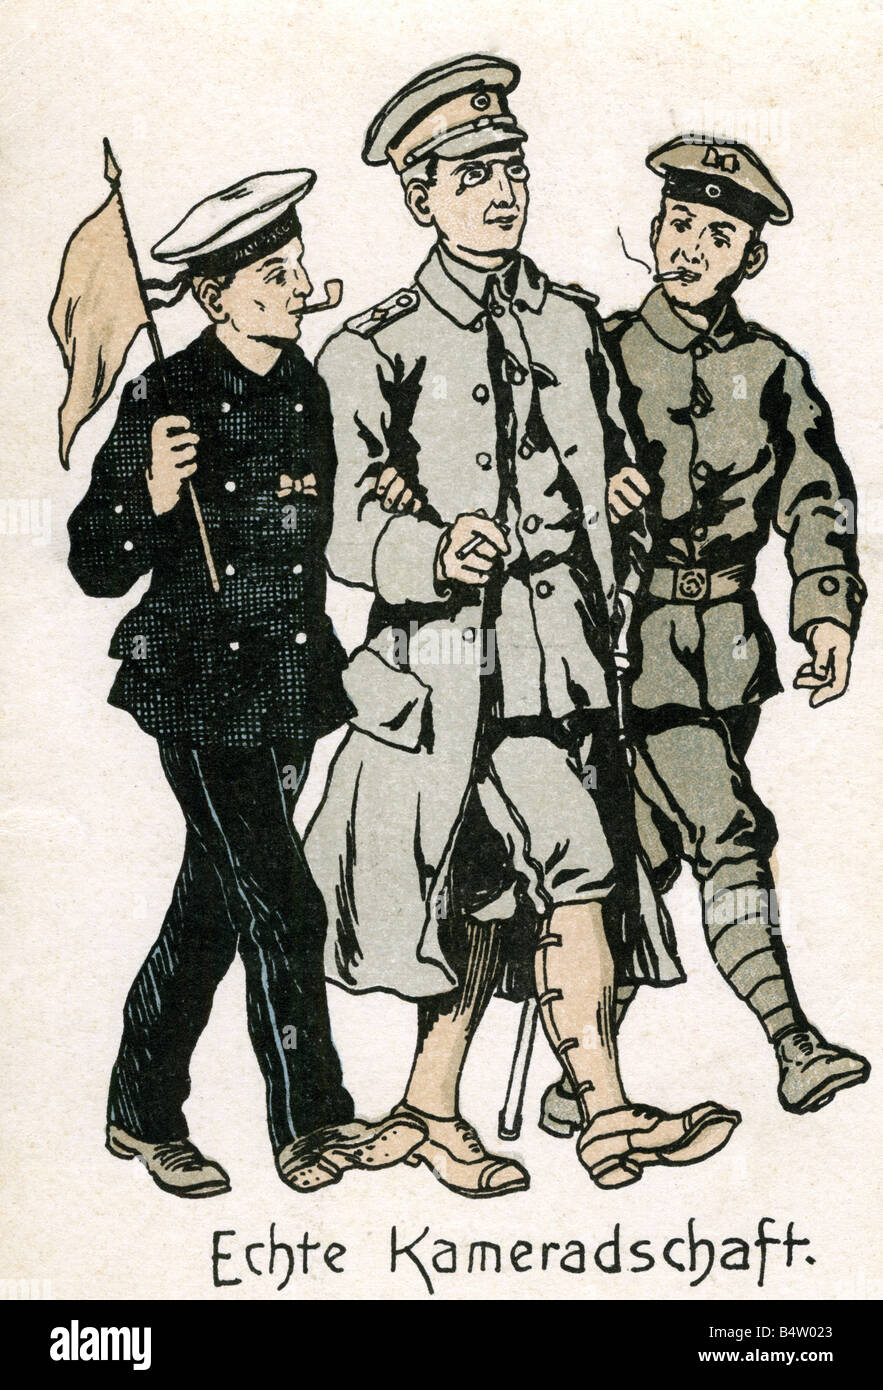 events, First World War / WWI, military postcards, postcard 'Echte Kameradschaft' (True comradeship), Munich, Germany, 20th century, Stock Photo